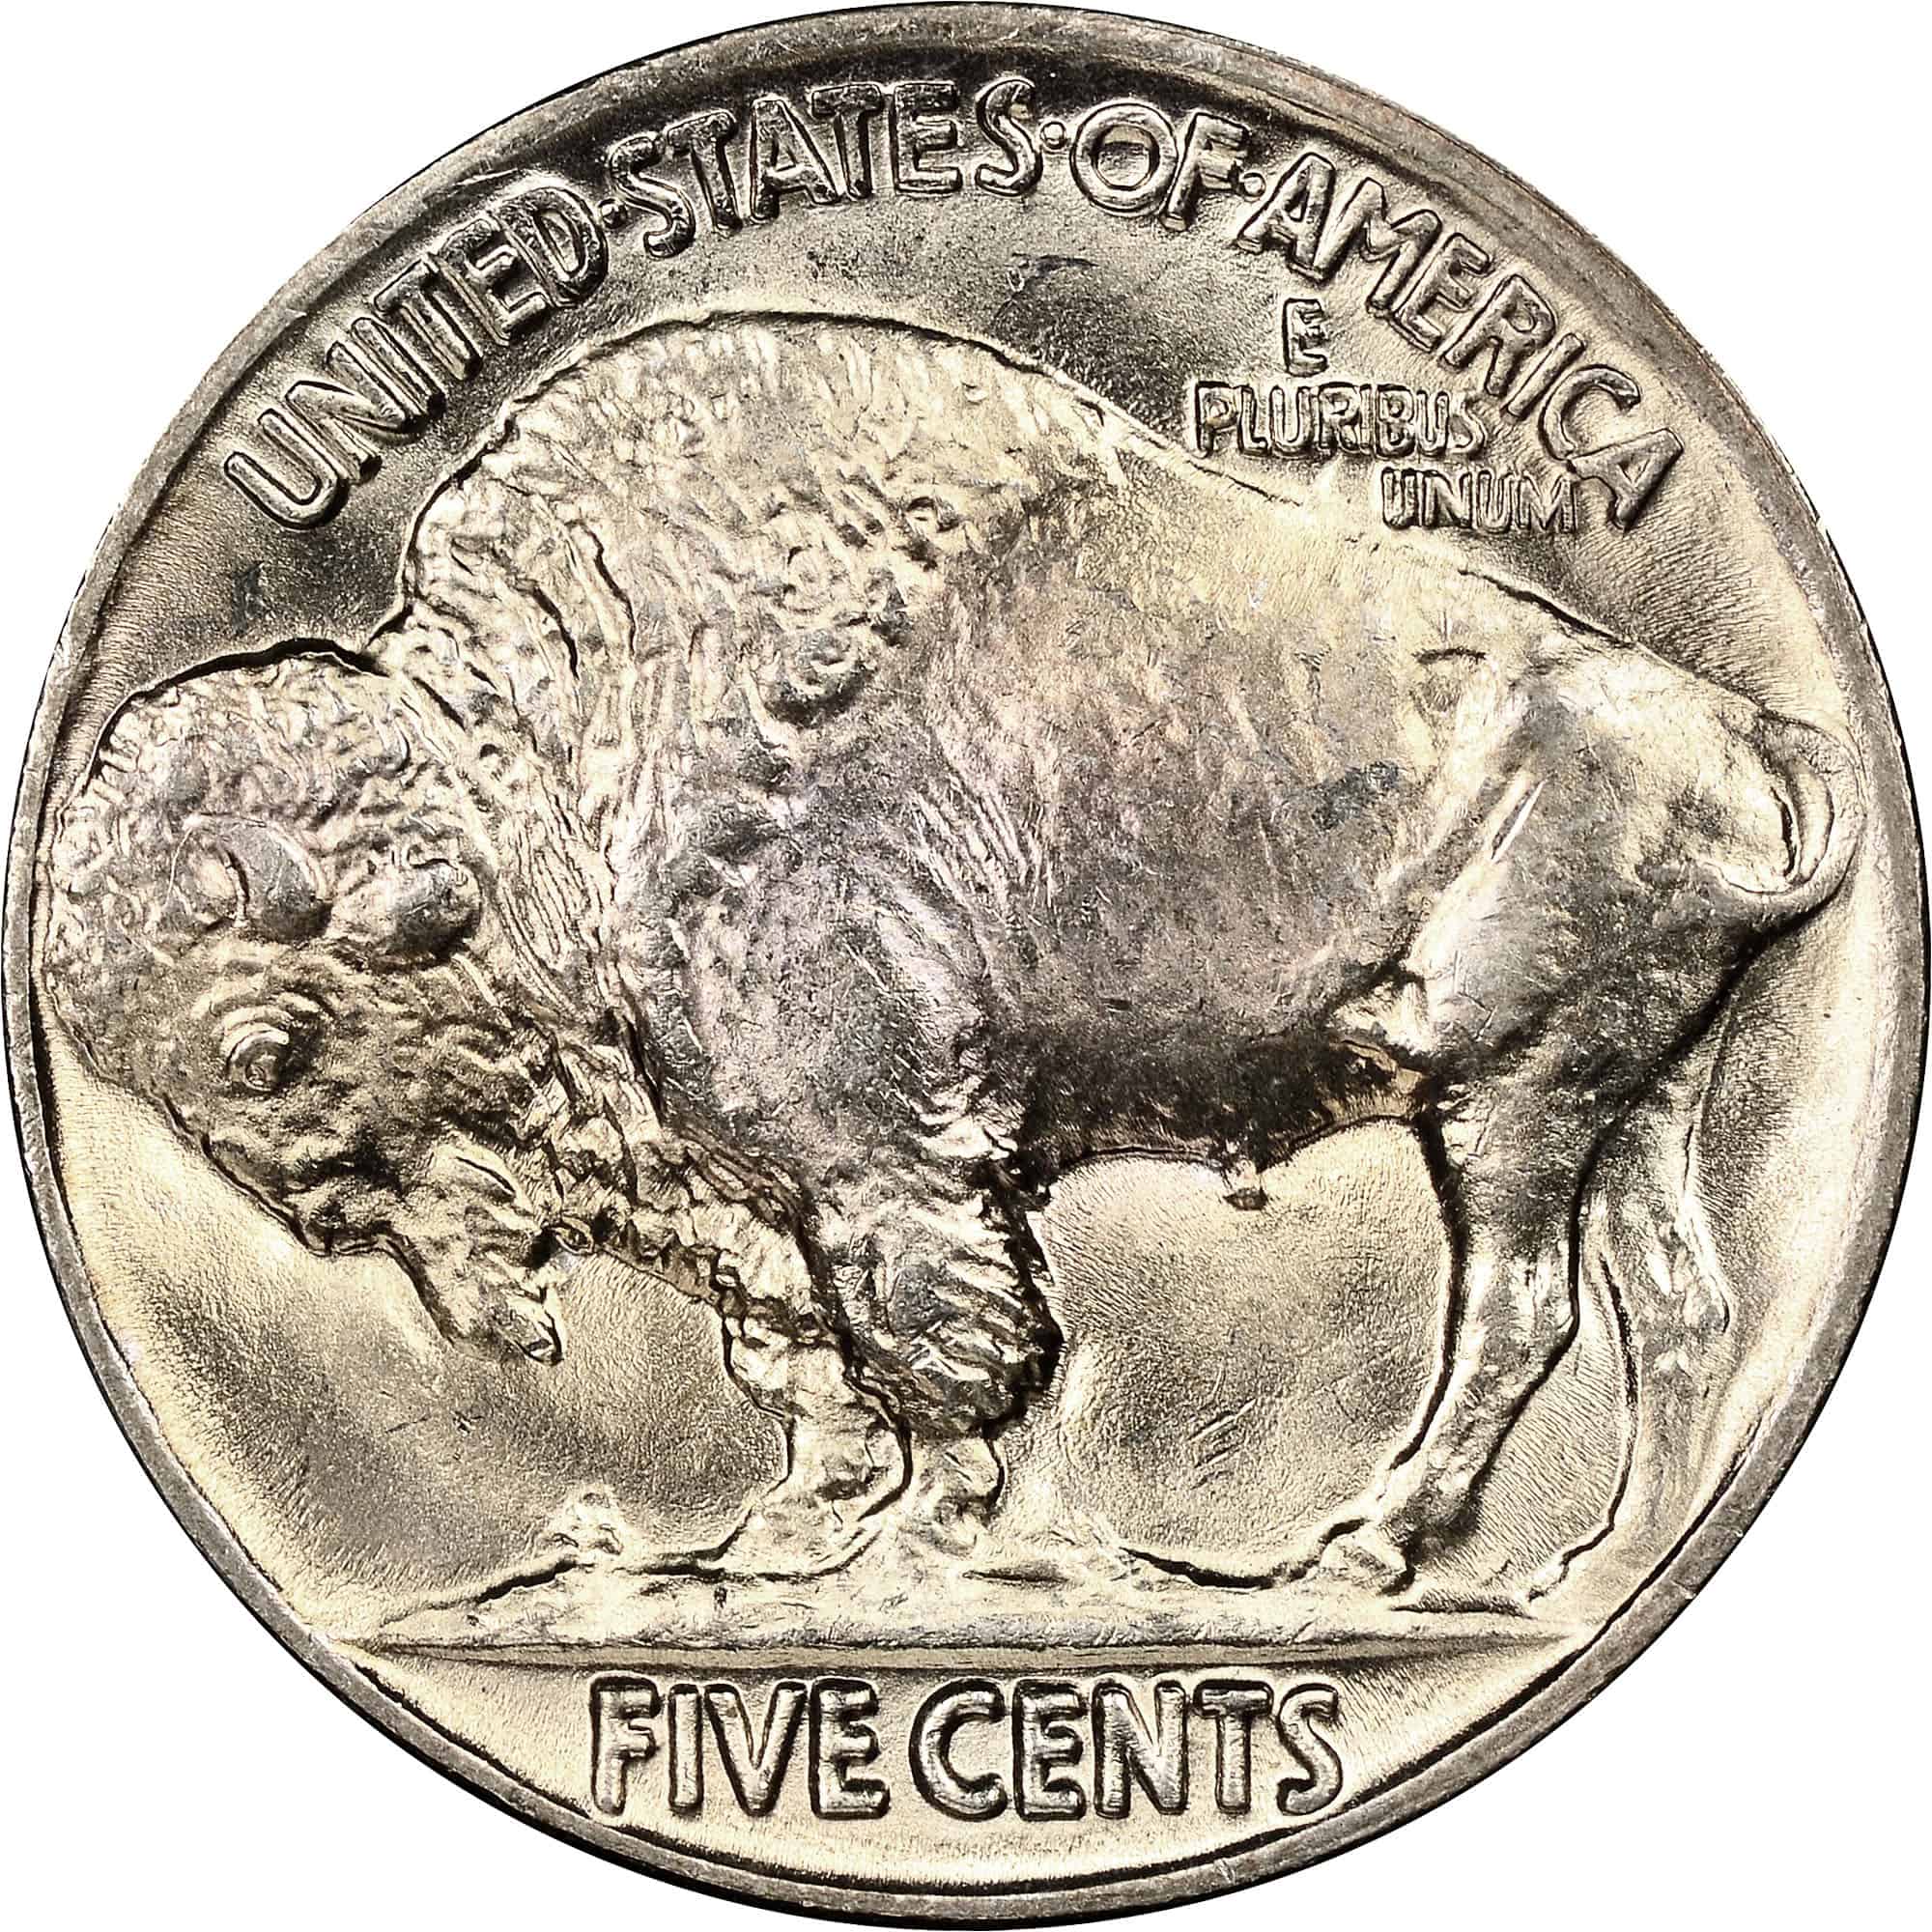 The reverse of the 1926 Buffalo nickel